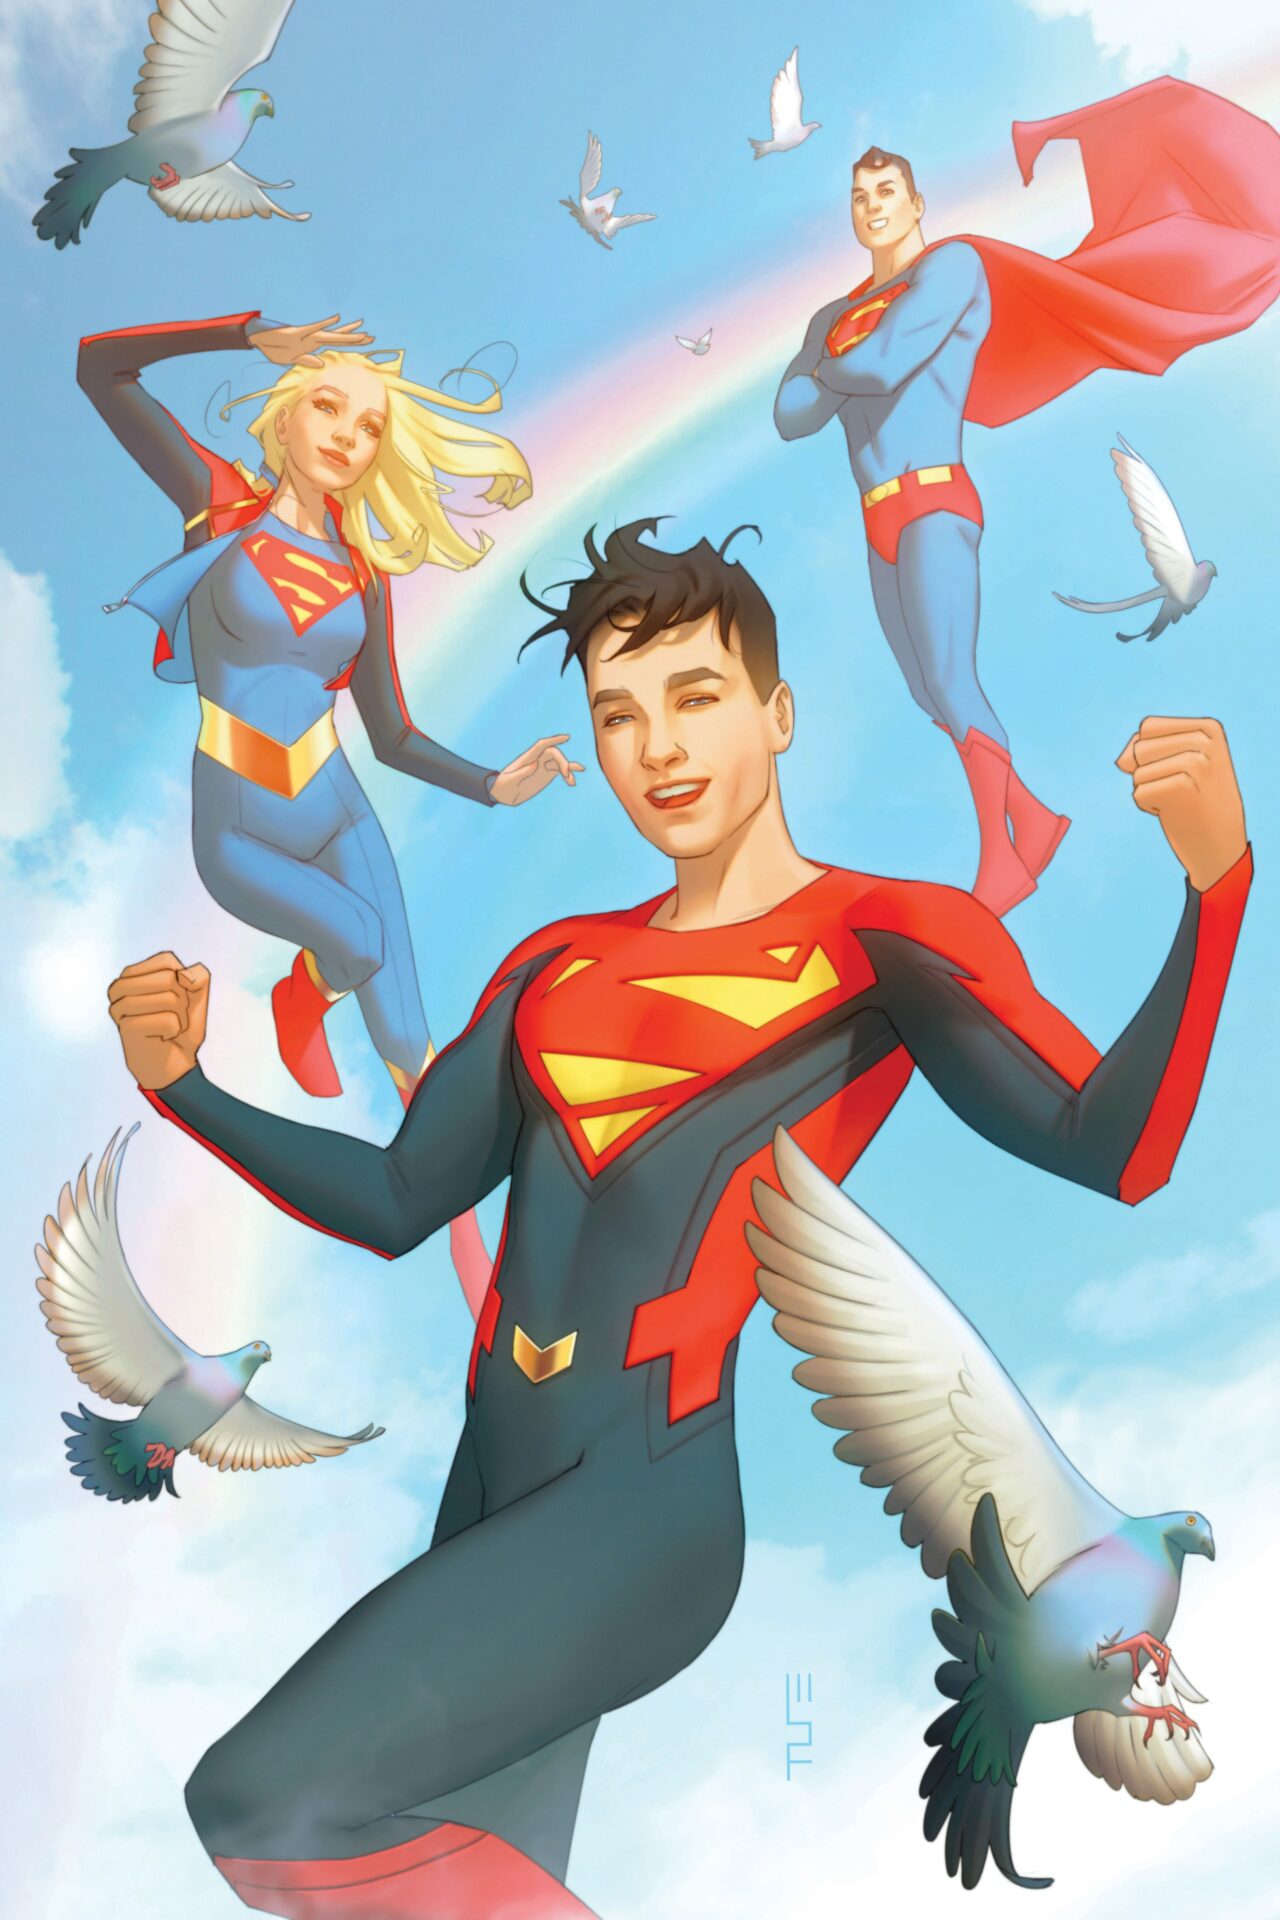 Pride cover for Superman #5